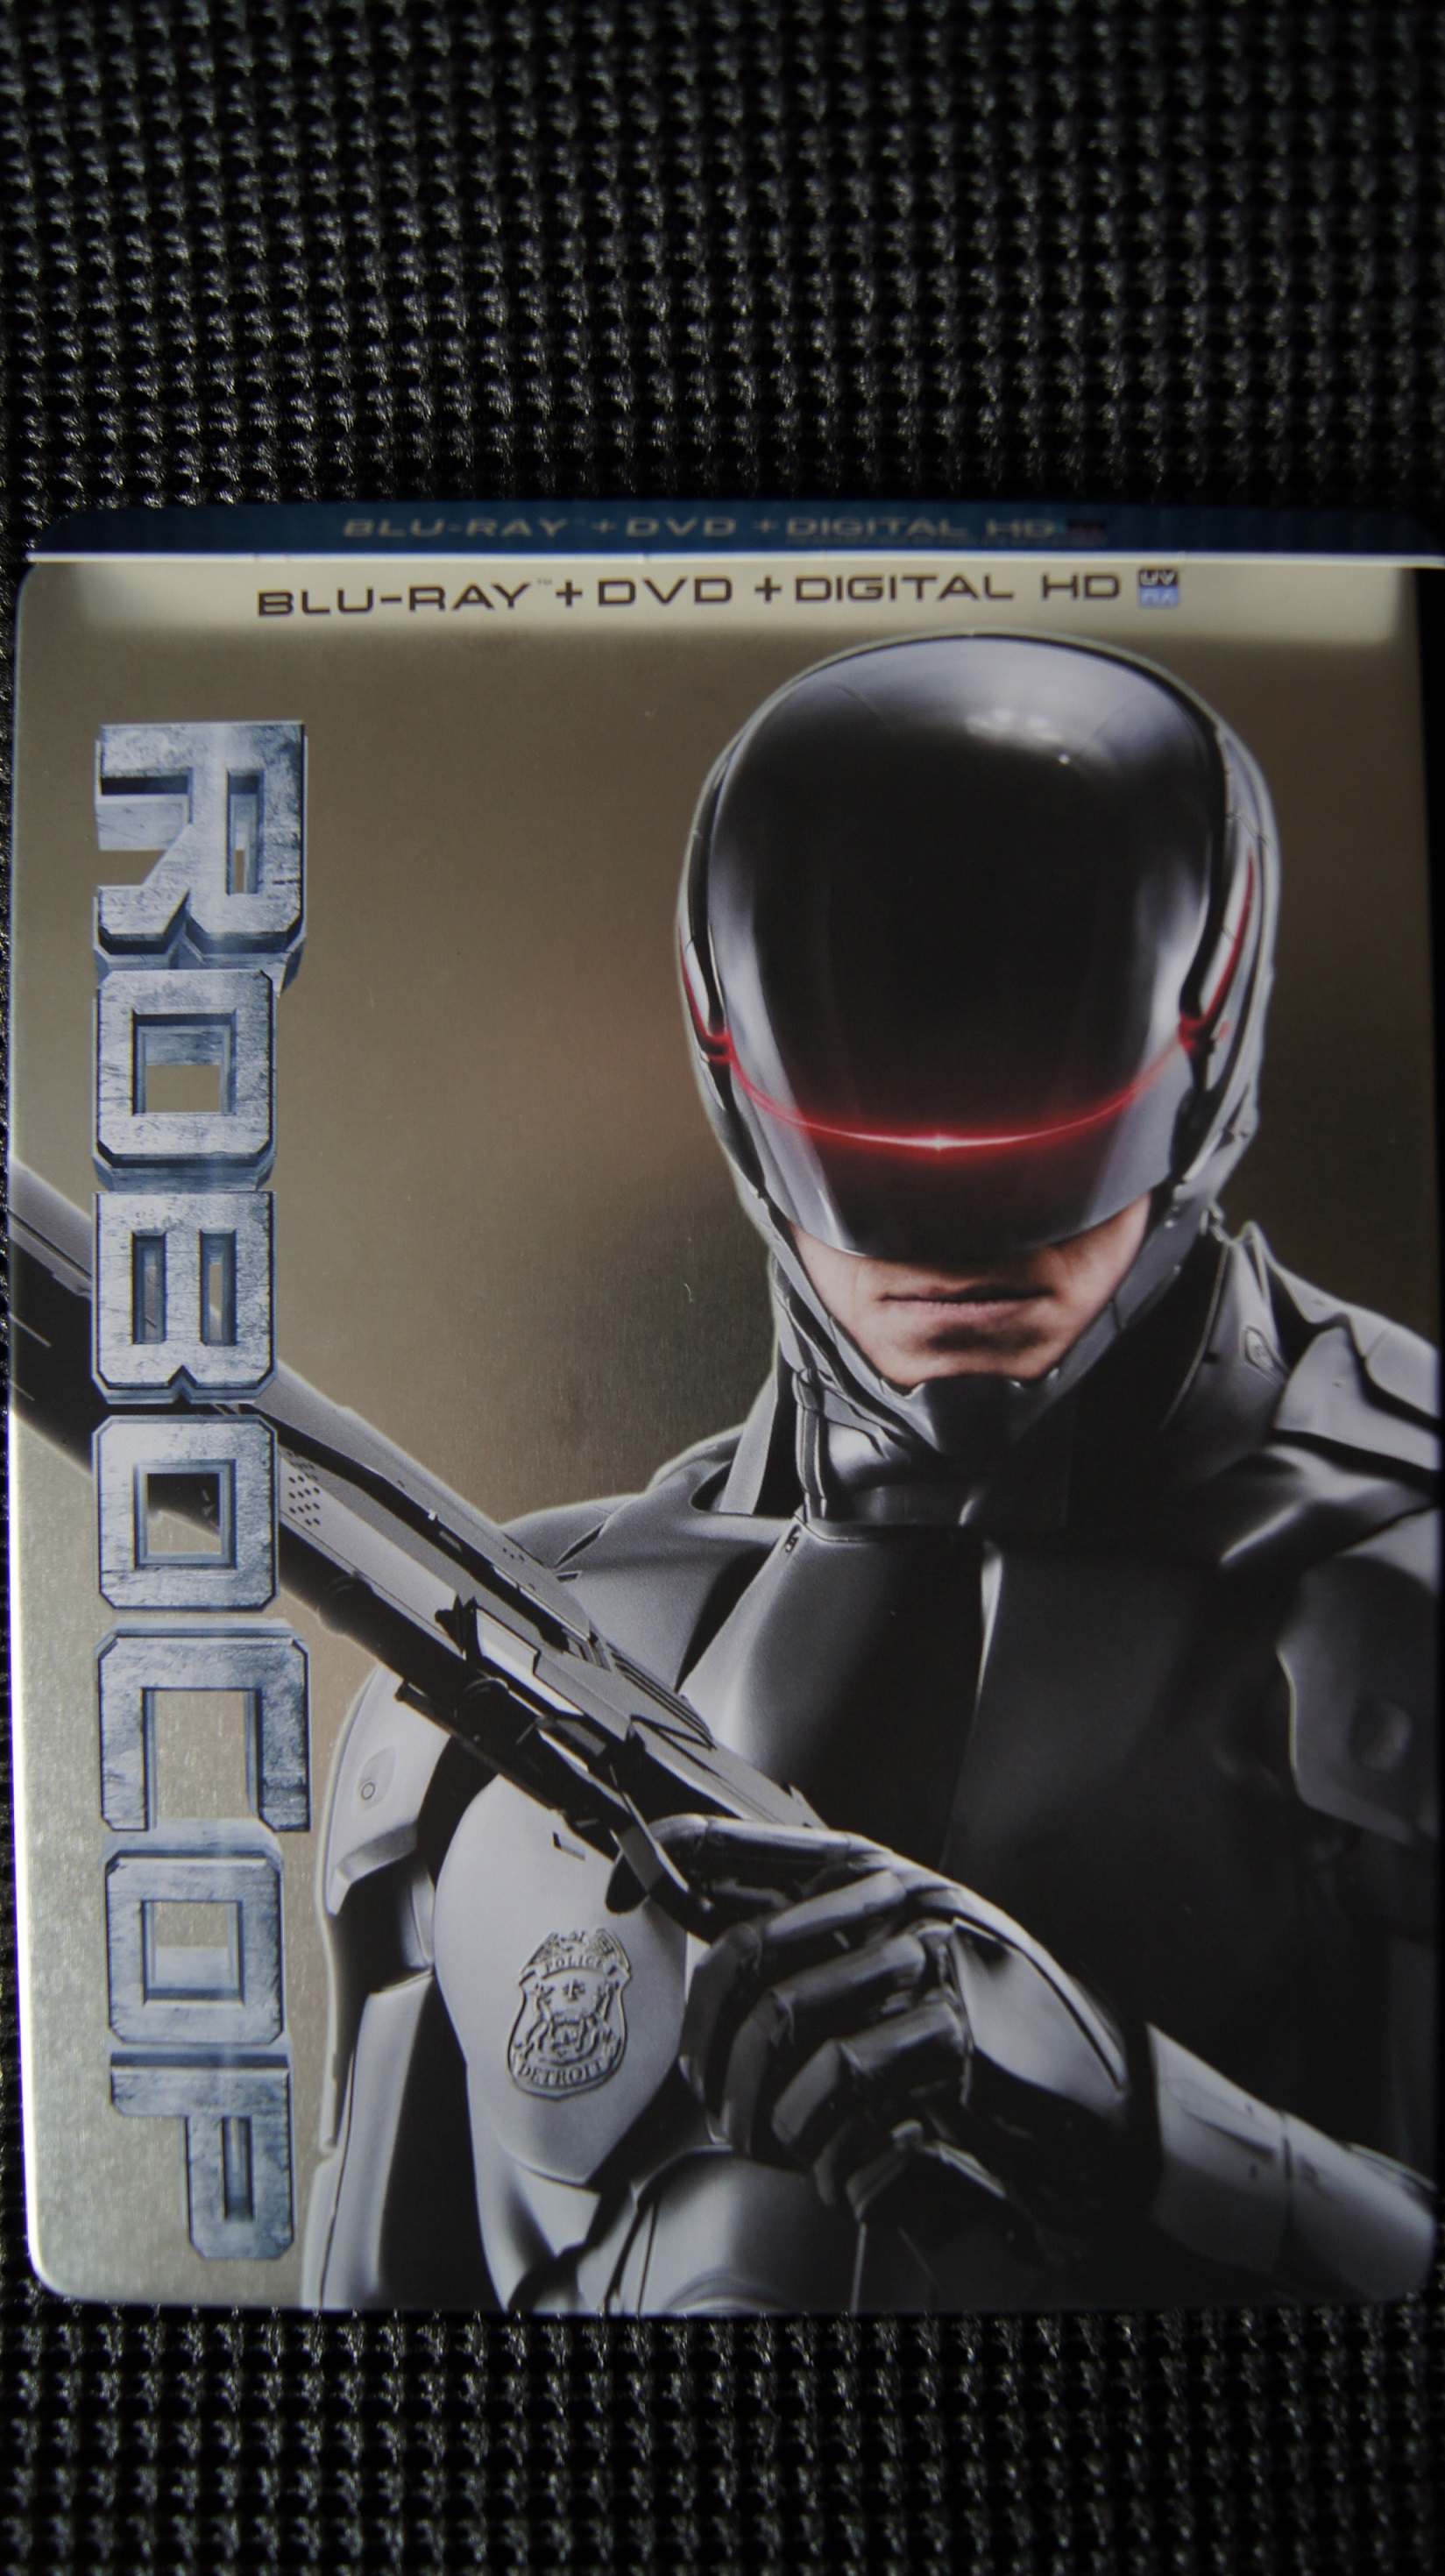 Robocop (2014) - Future Shop Exclusive Futurepak